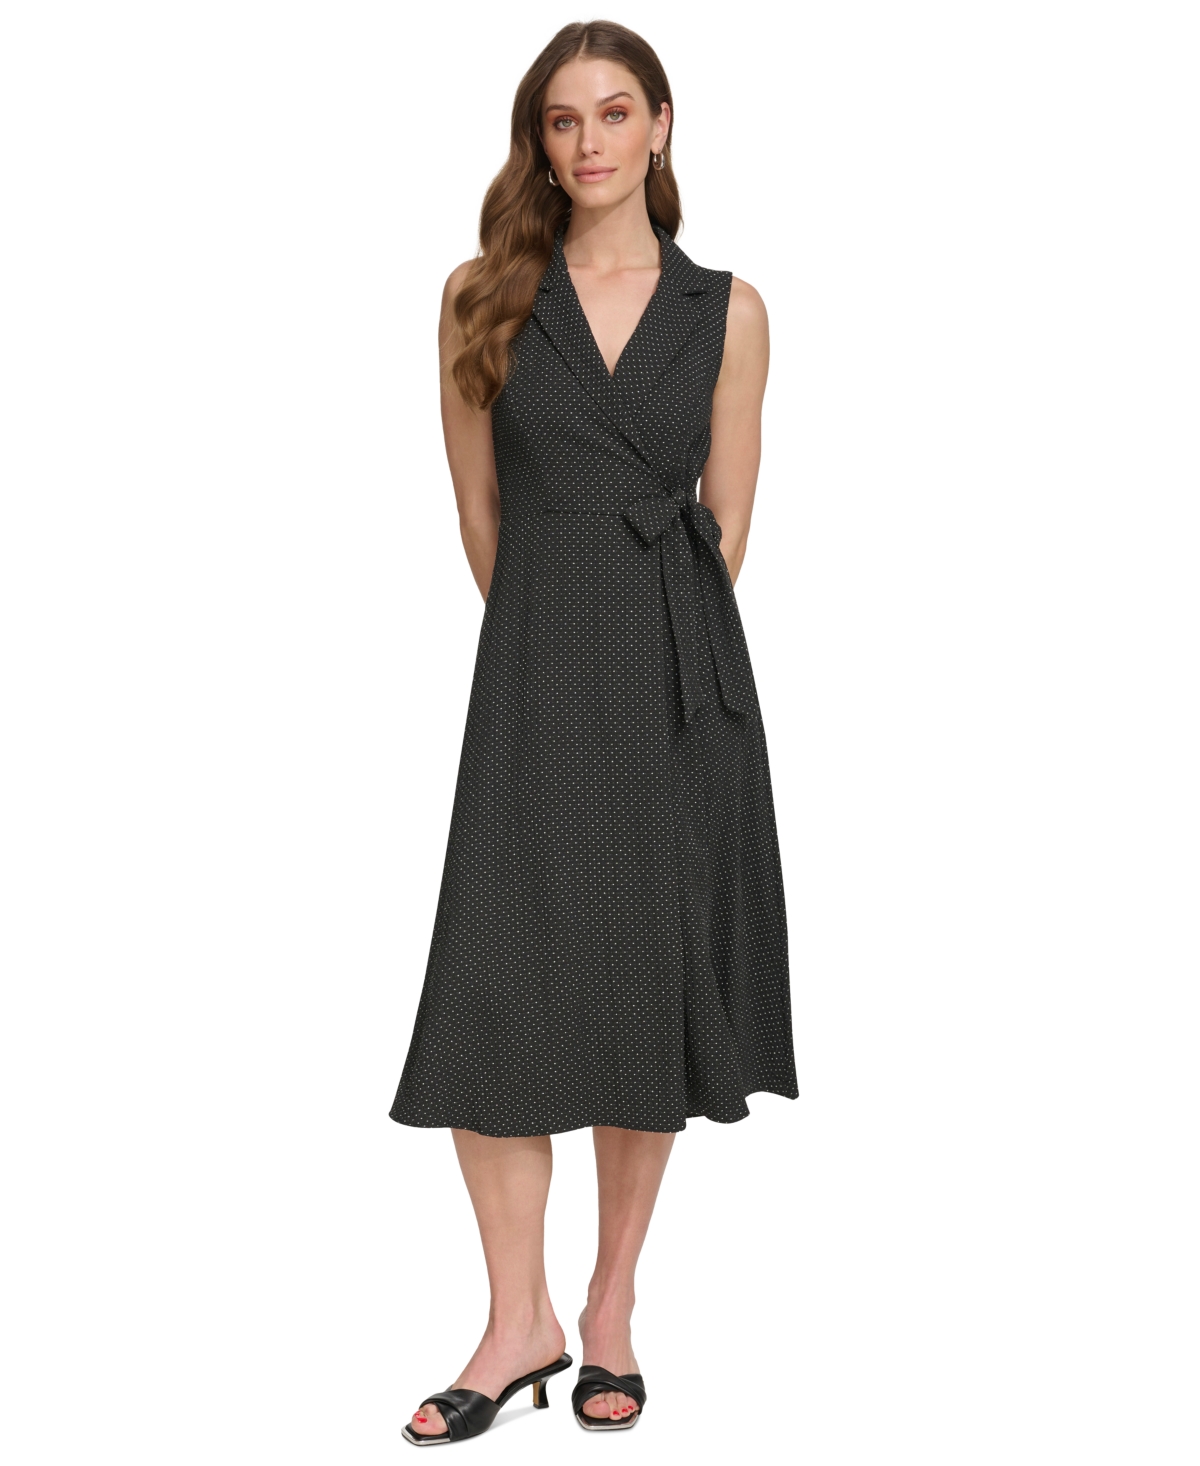 Women's Printed Tie-Waist Sleeveless A-Line Dress - Black/Cream